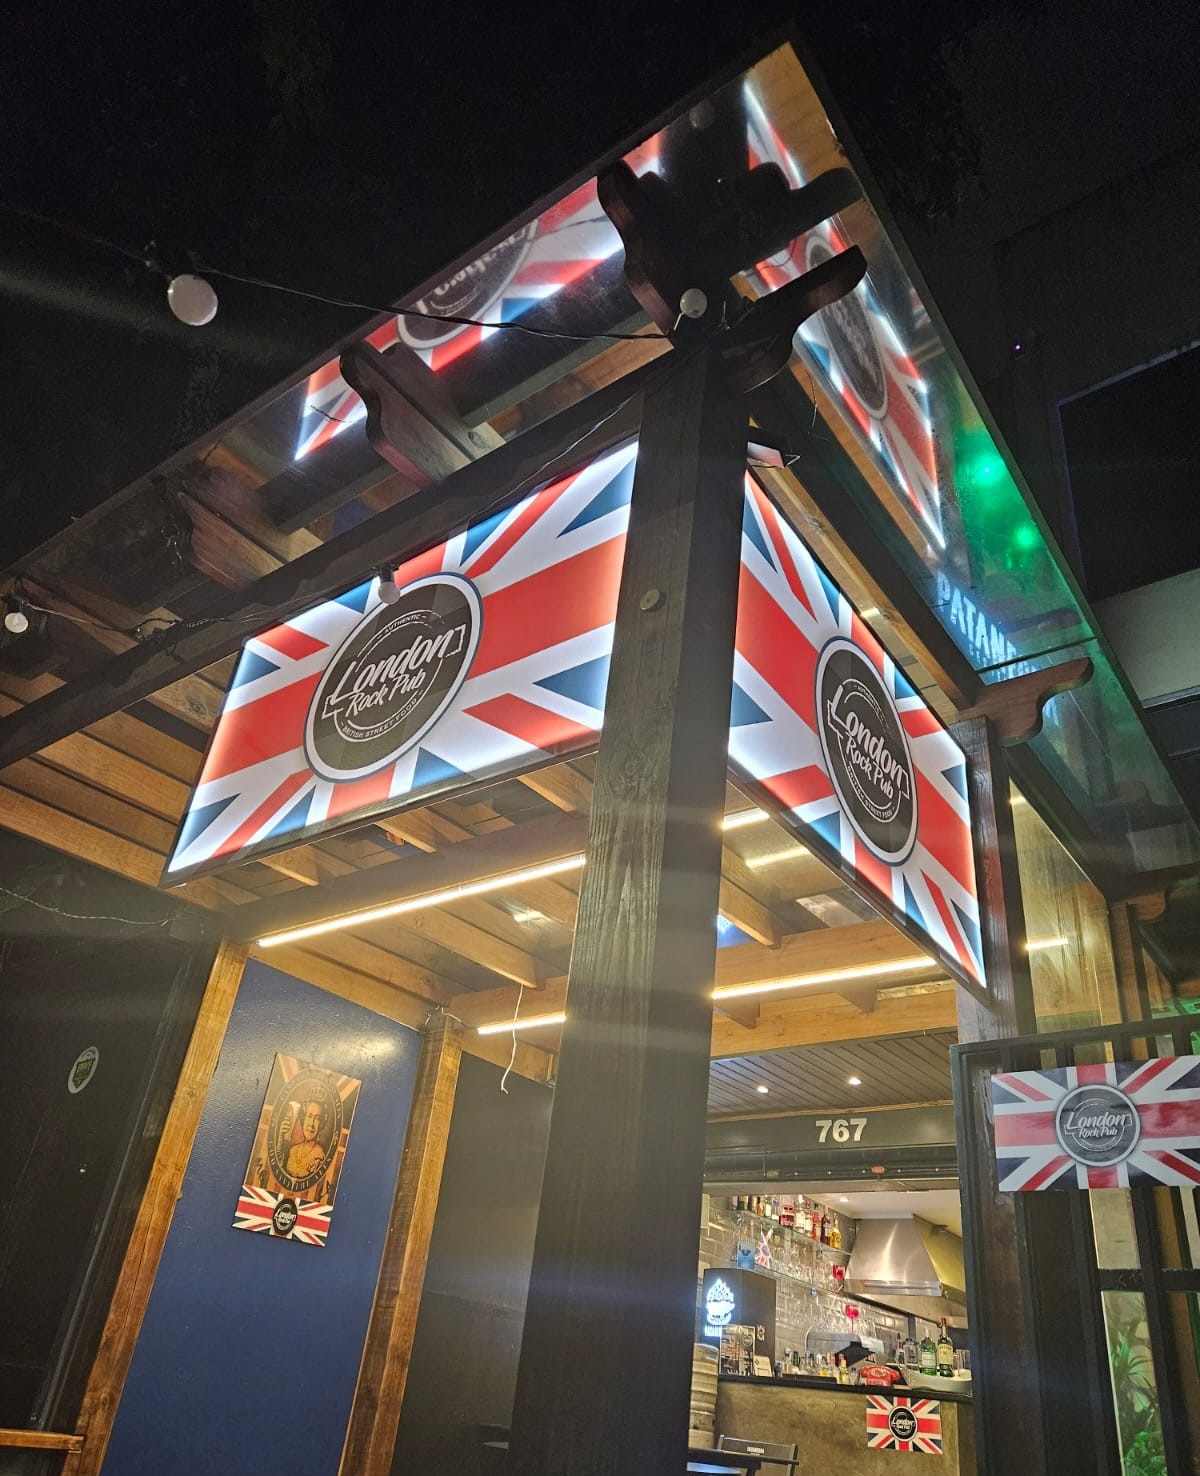 London Rock Pub inaugura em Curitiba